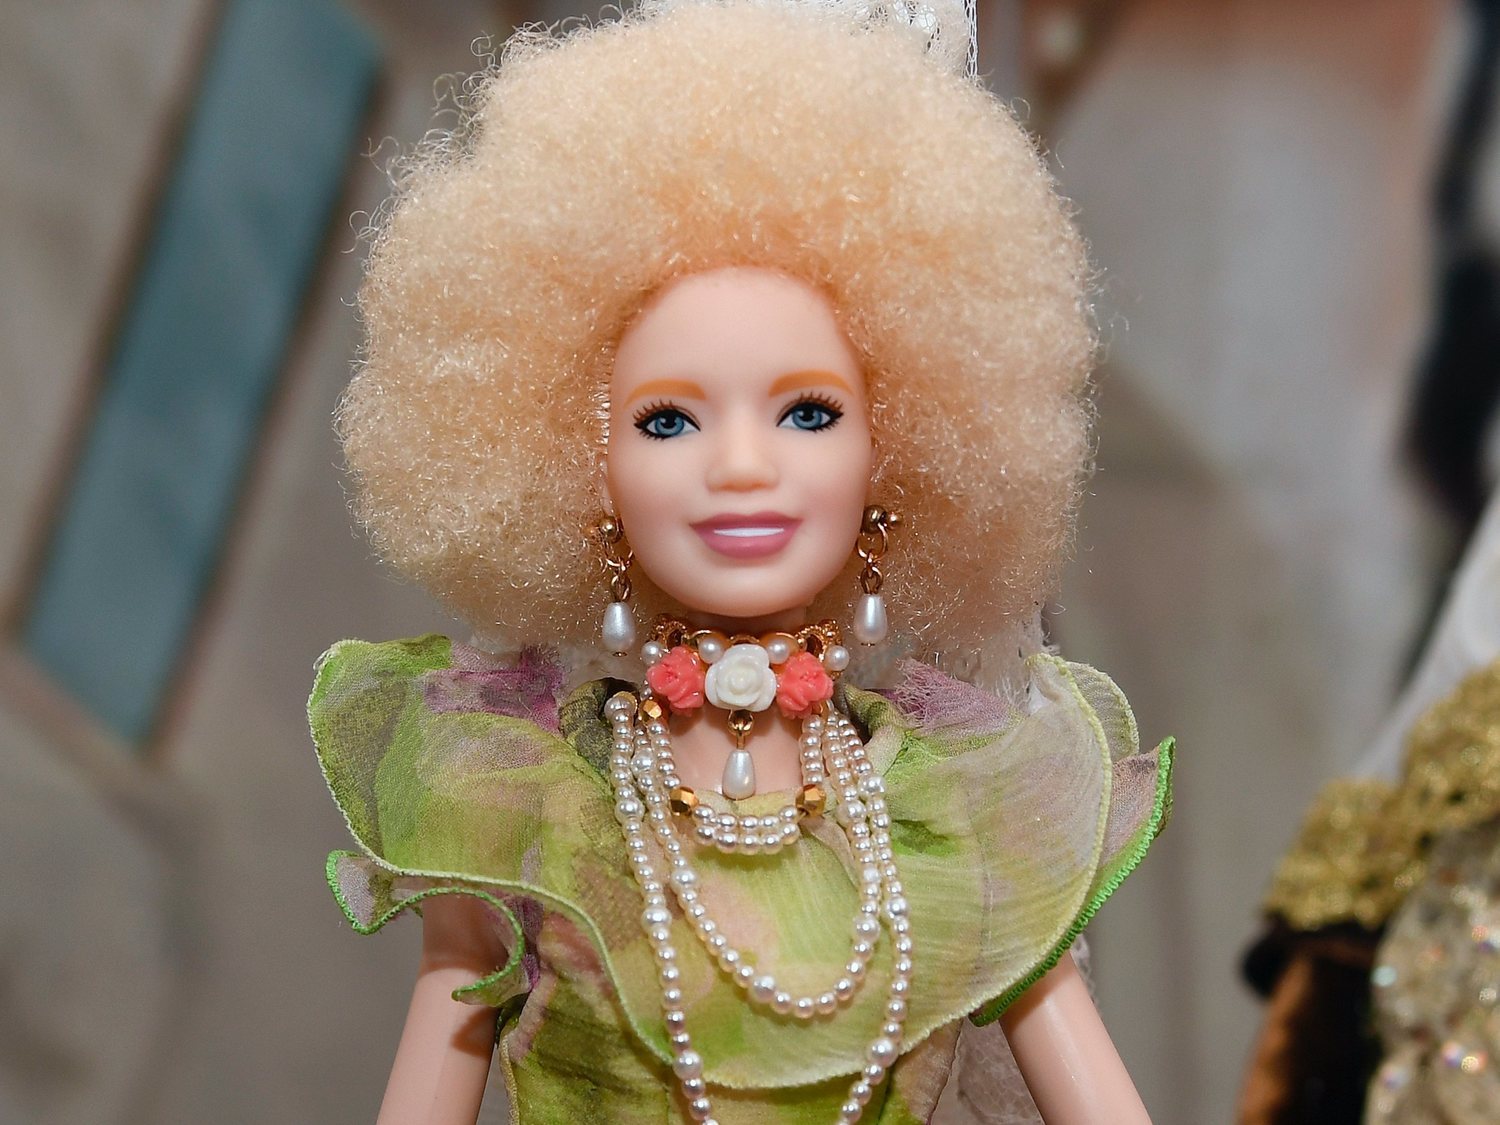 La duquesa de Alba se convierte en muñeca Barbie